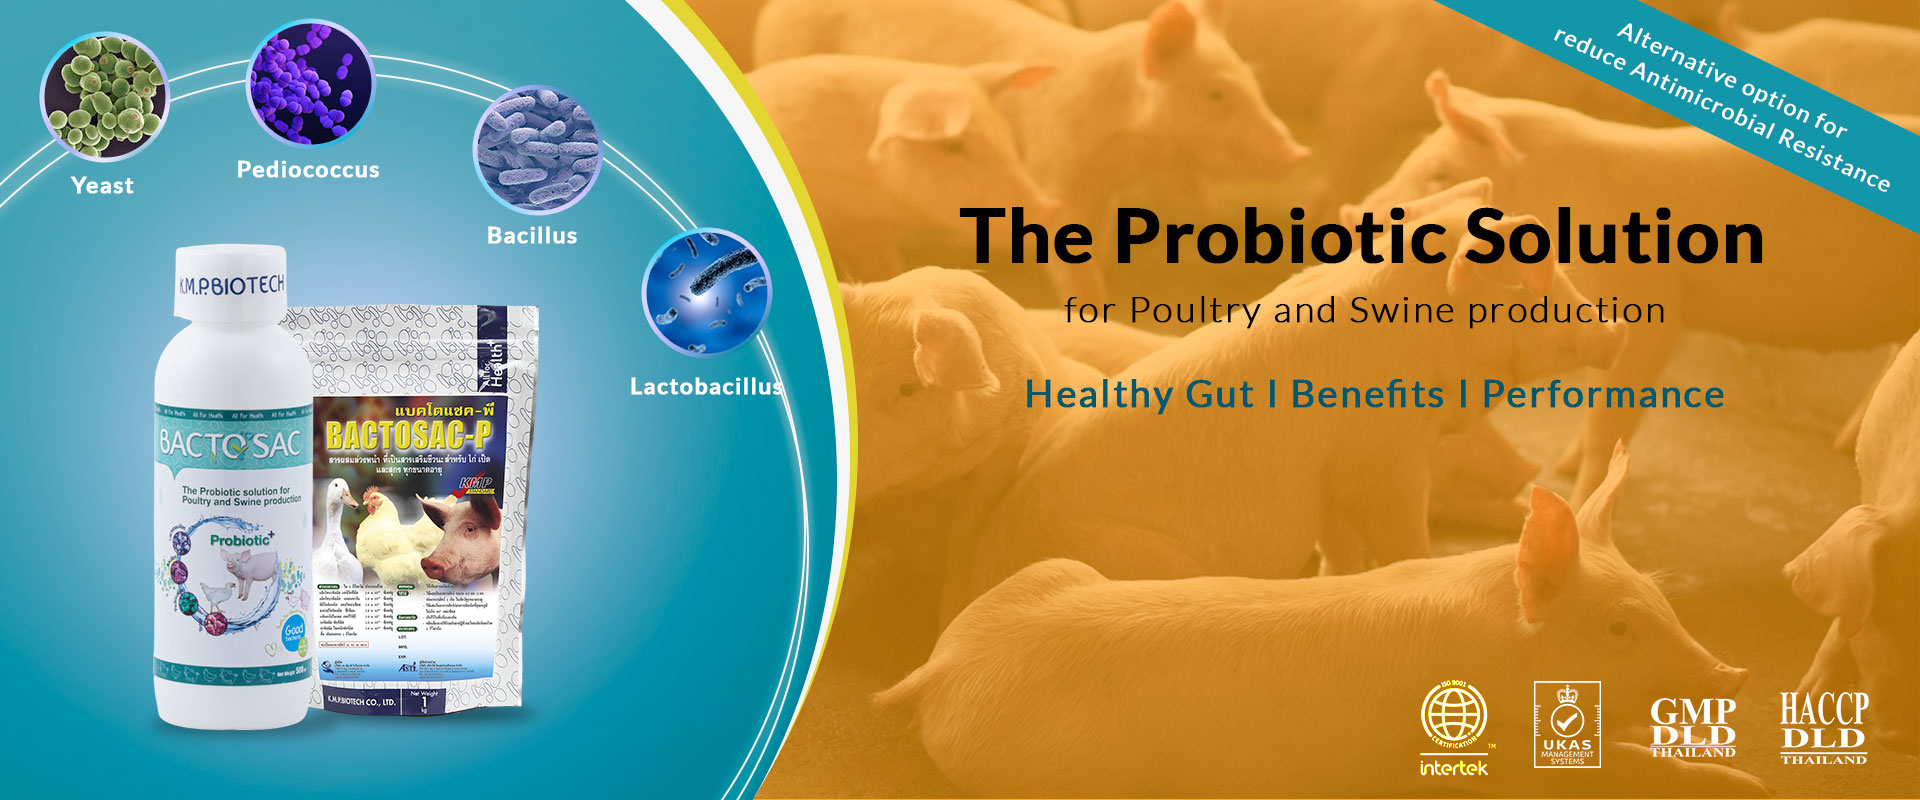 Probiotic-solution-banner